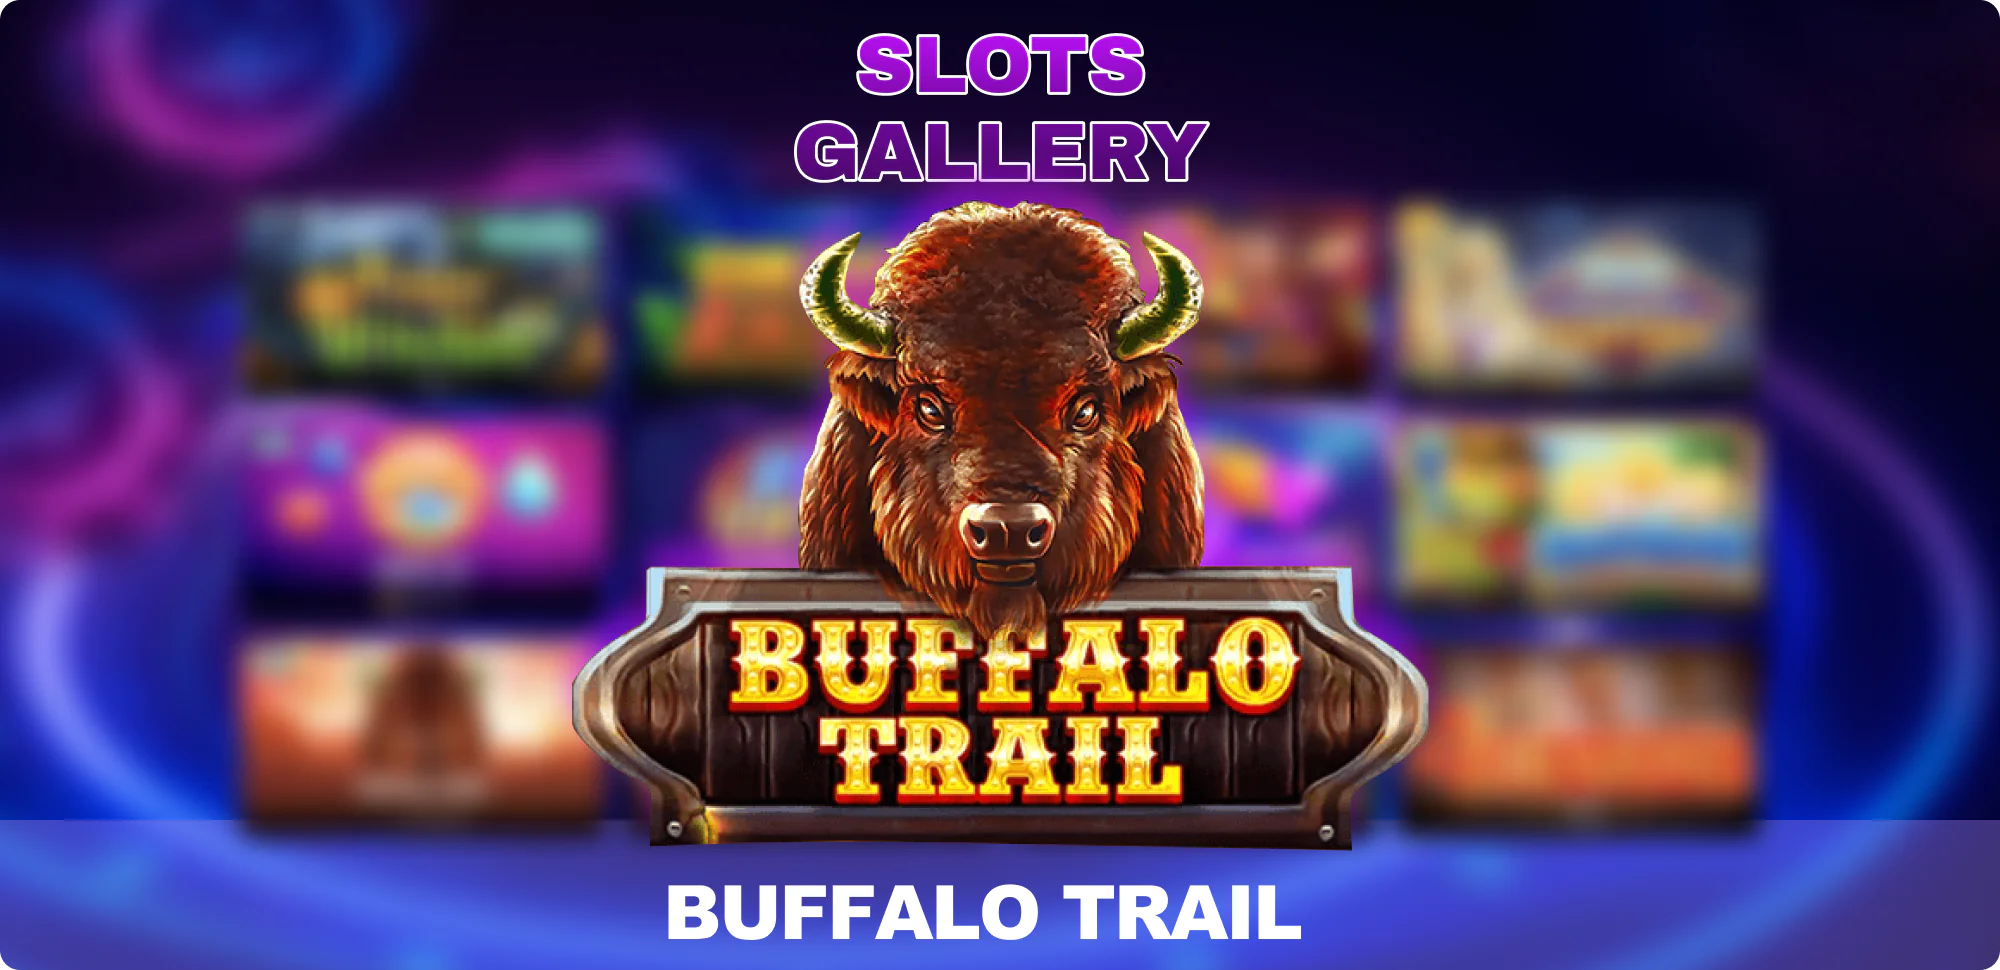 Slots Gallery Casino - Buffalo Trail